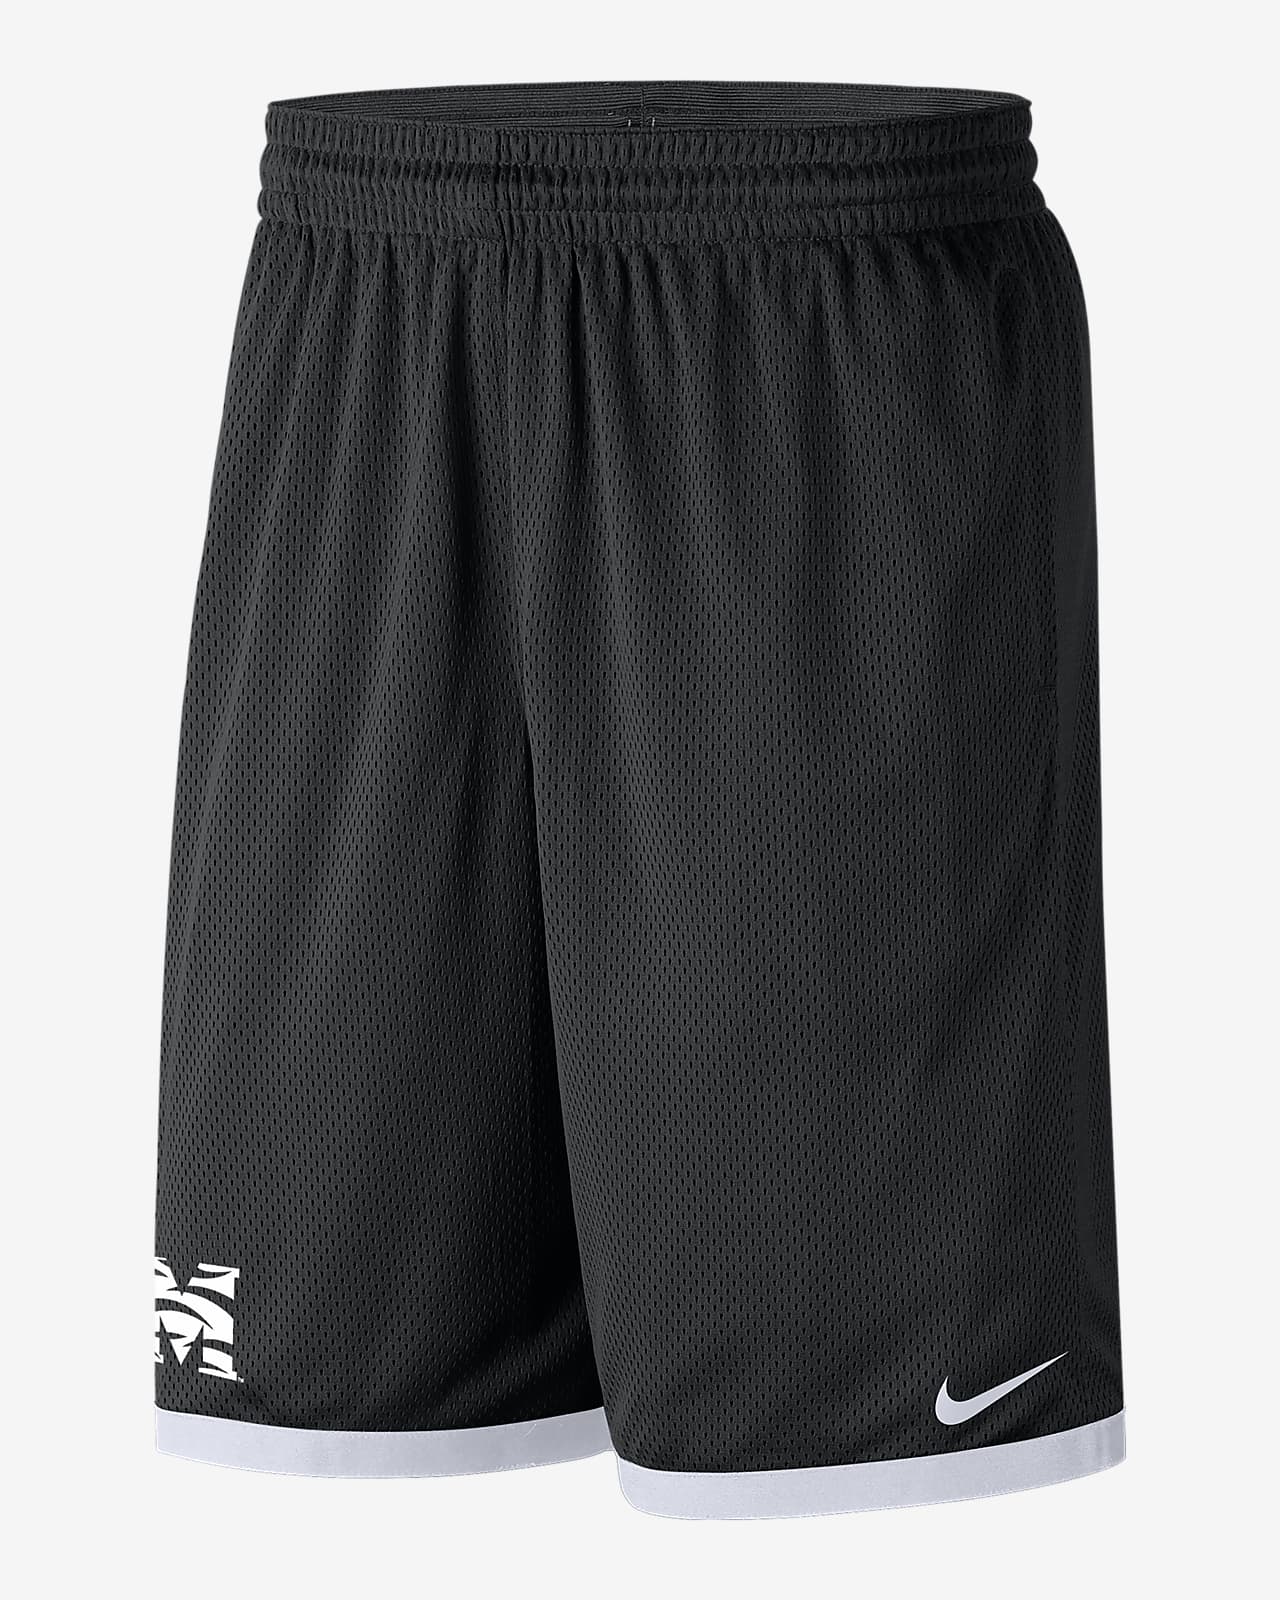 Morehouse Men's Nike College Mesh Shorts